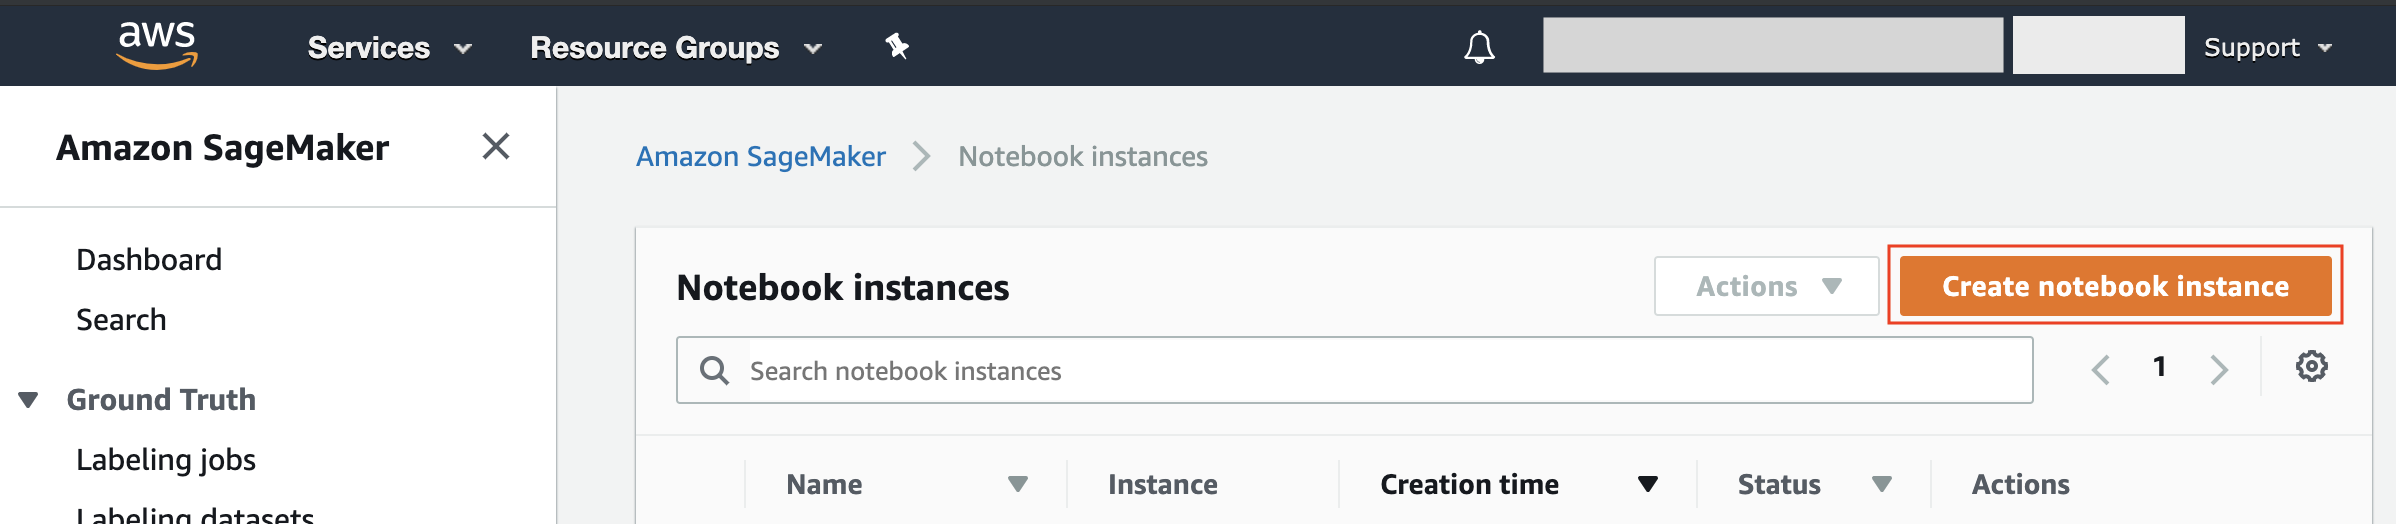 Notebook Instances screen